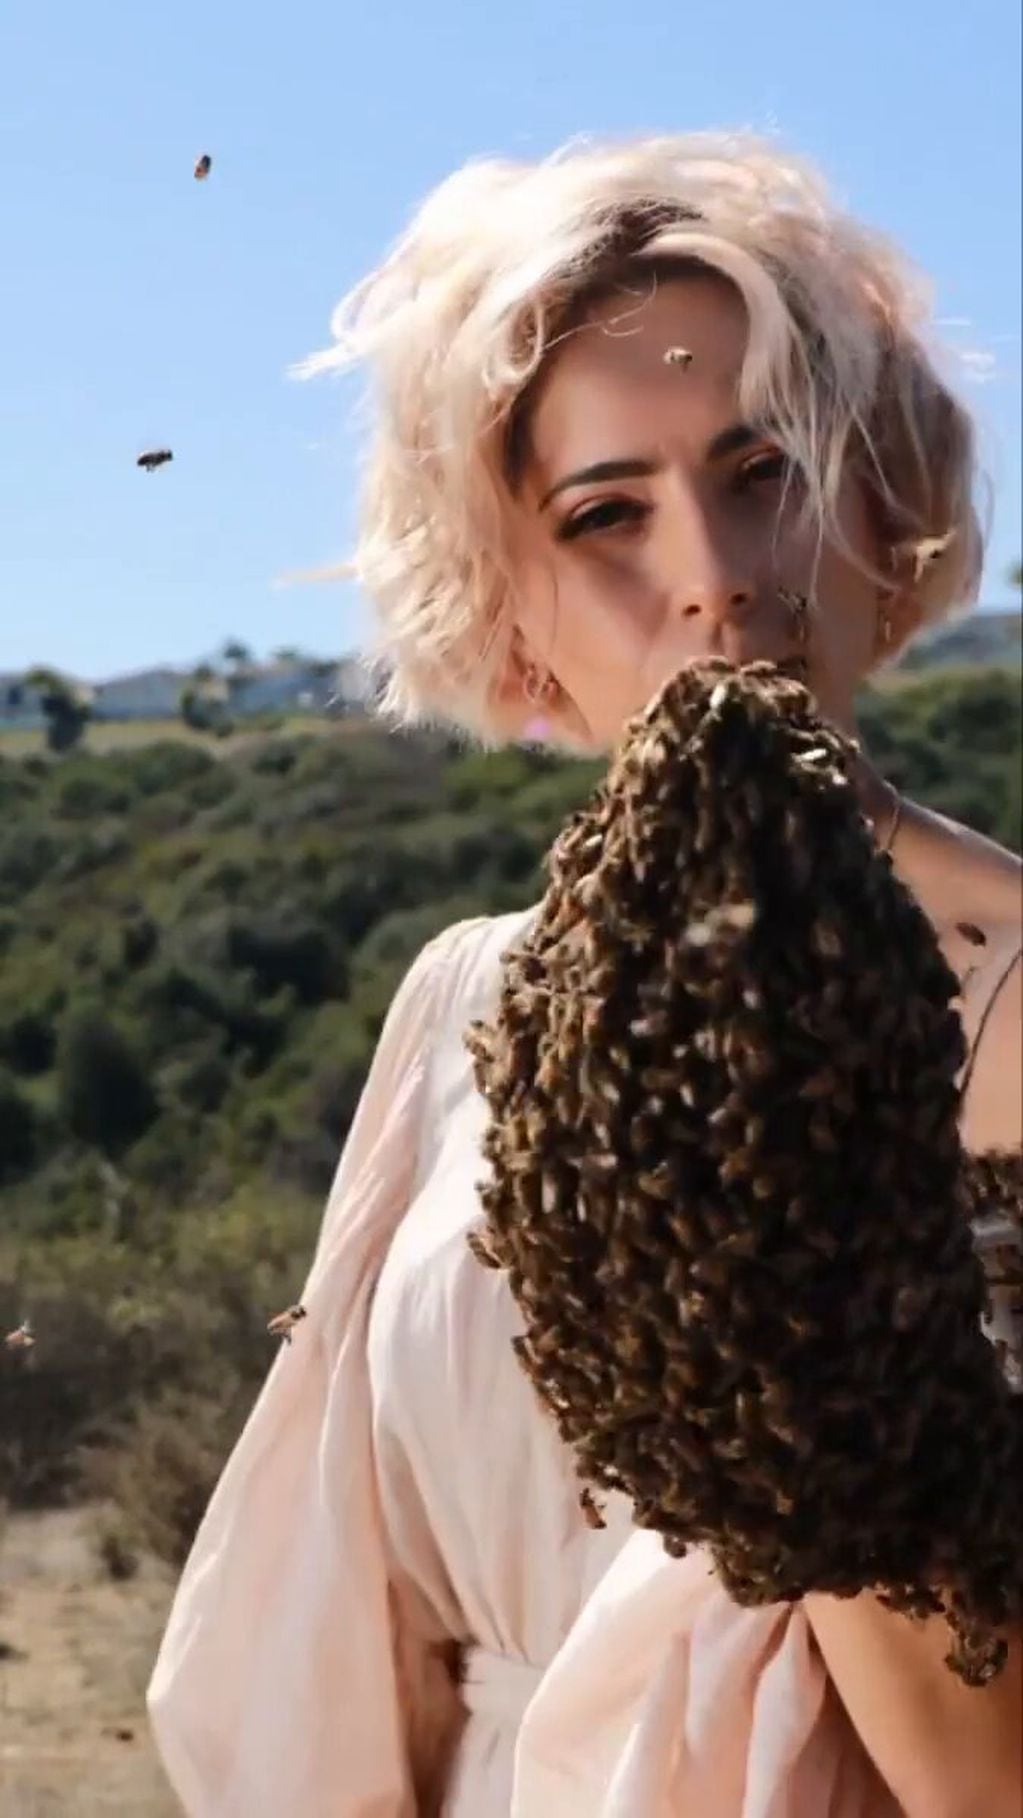 Victoria Vanucci besando abejas